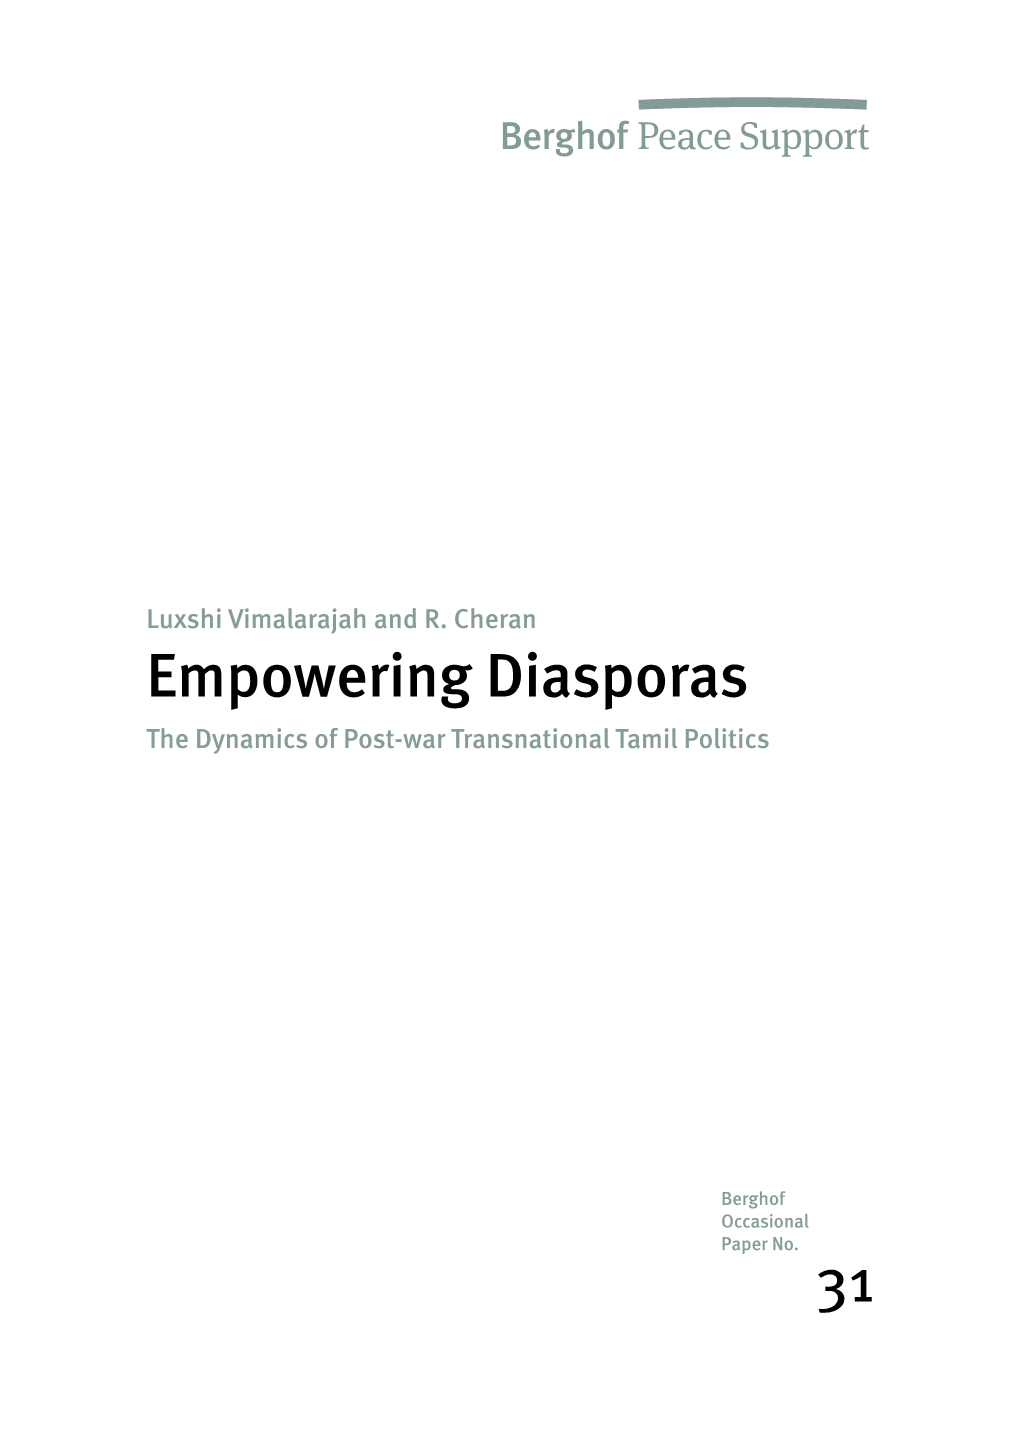 Empowering Diasporas the Dynamics of Post-War Transnational Tamil Politics